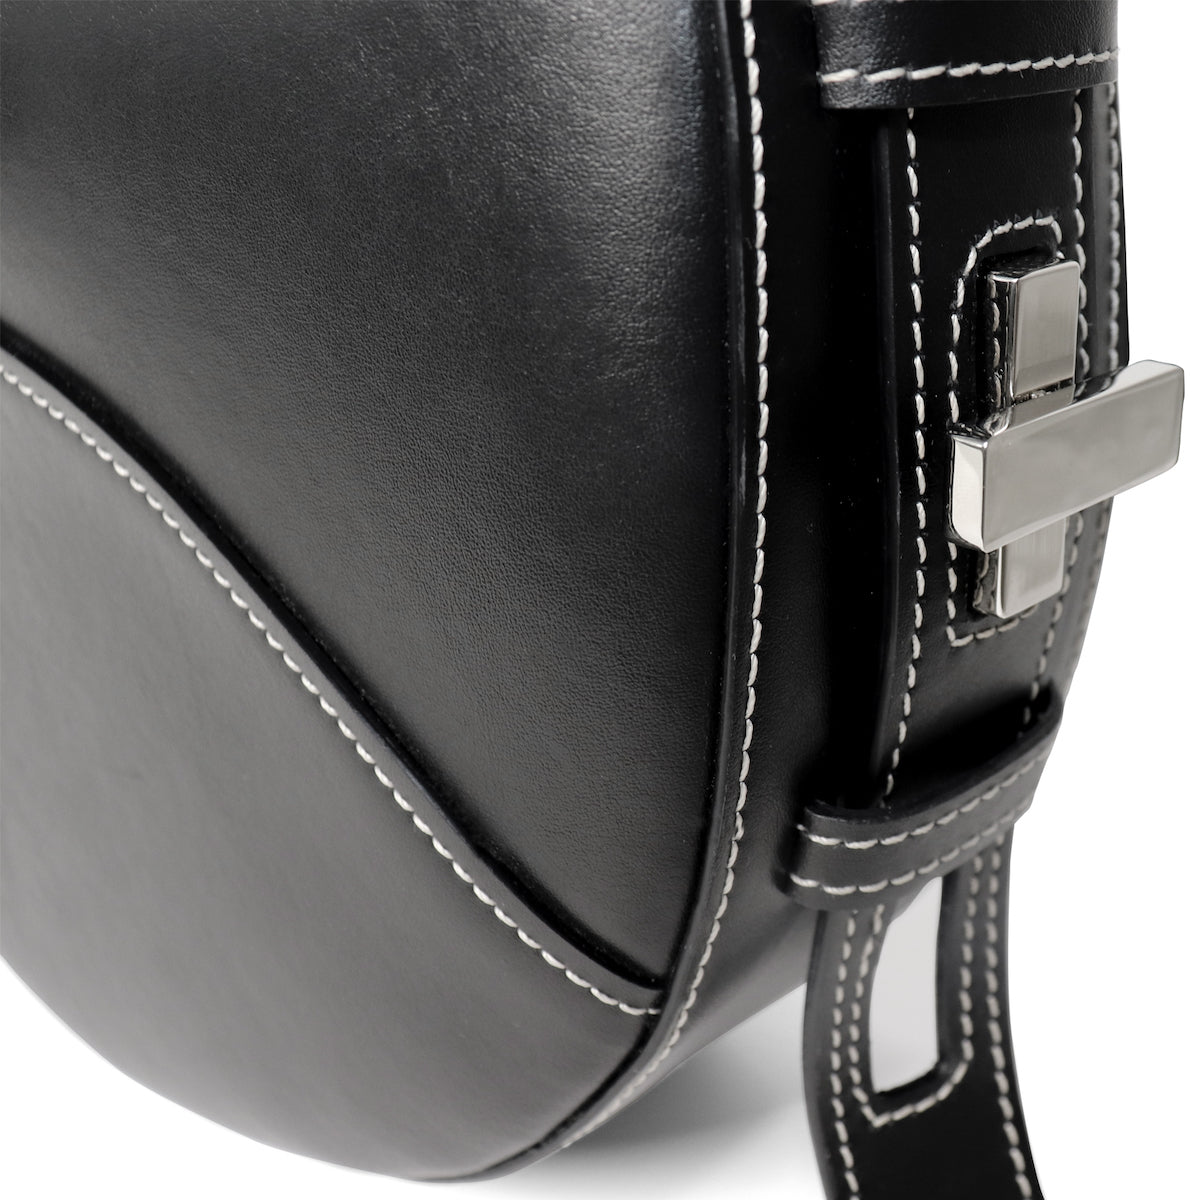 Shaker Twist Bag in black, detailed view of harware